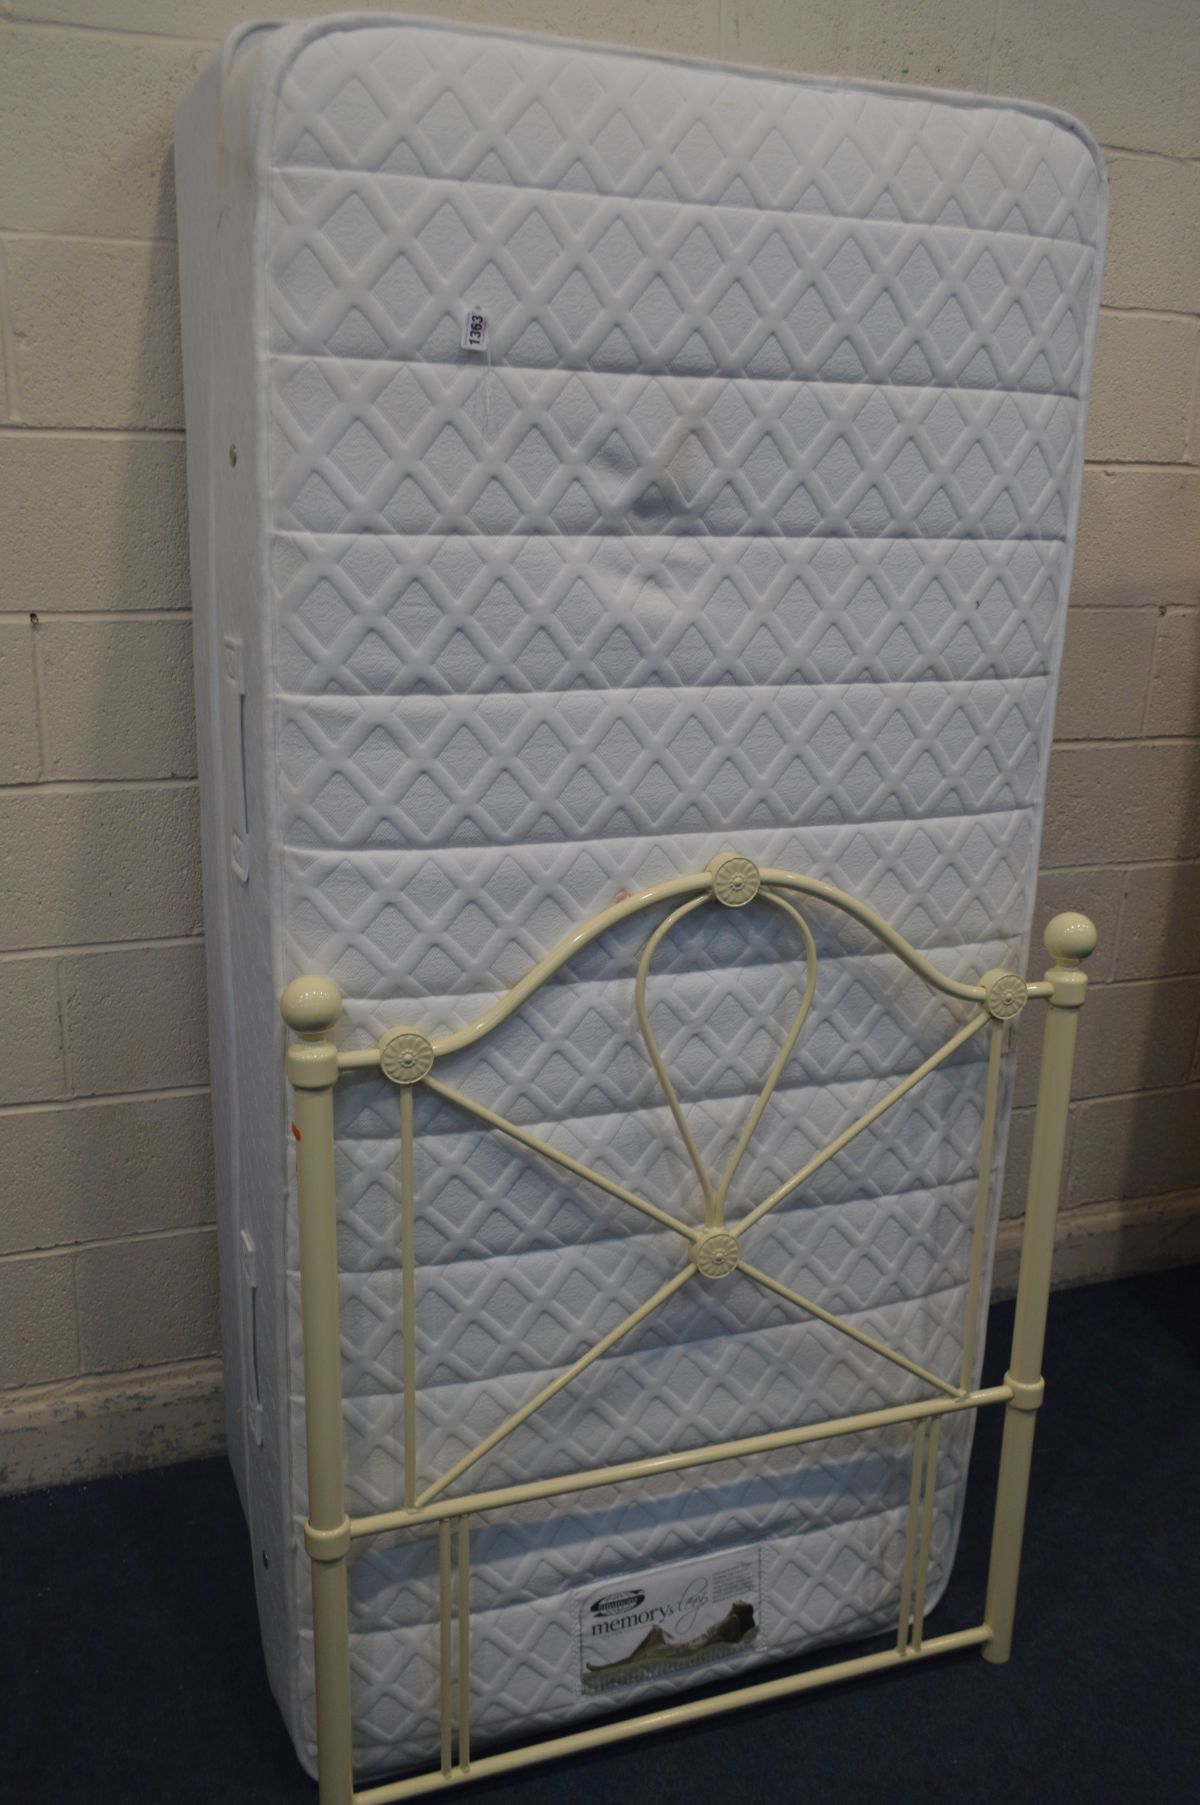 A SIMMONS SINGLE DIVAN BED, mattress and metal headboard